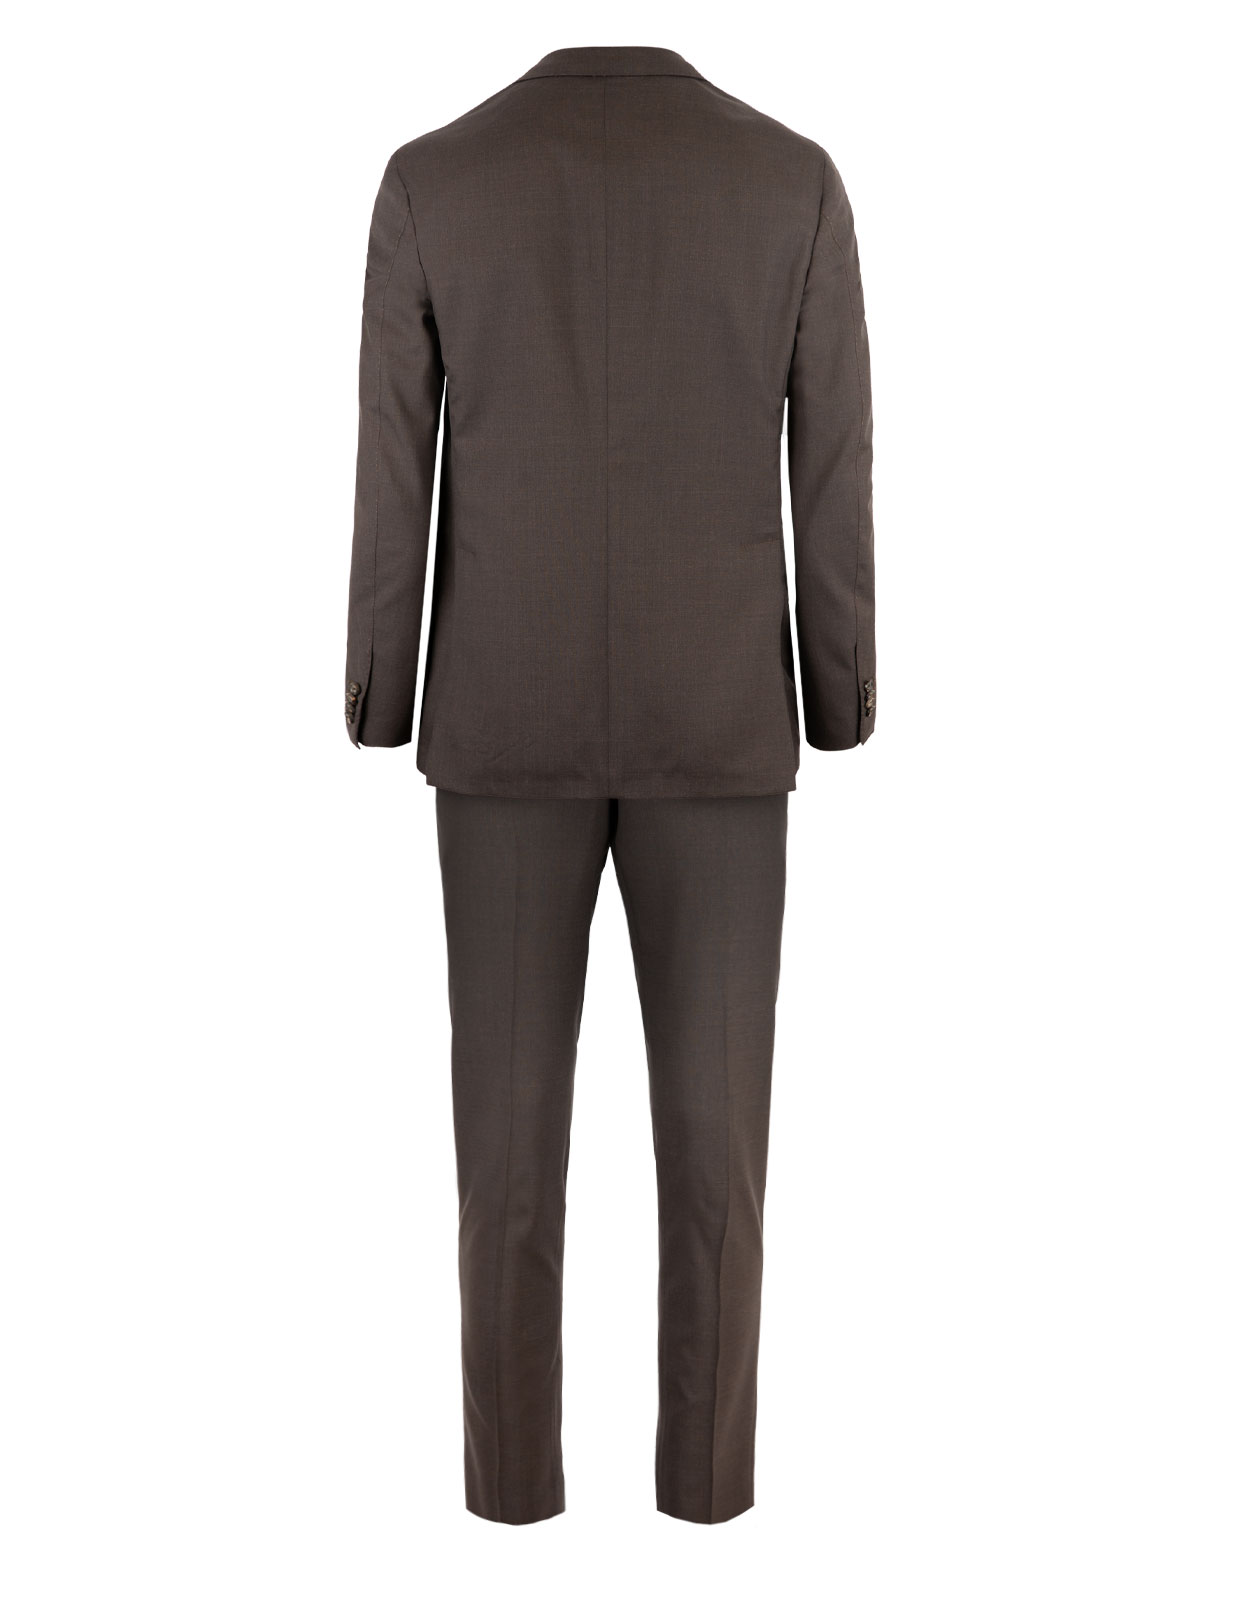 Napoli Suit Wool Brown